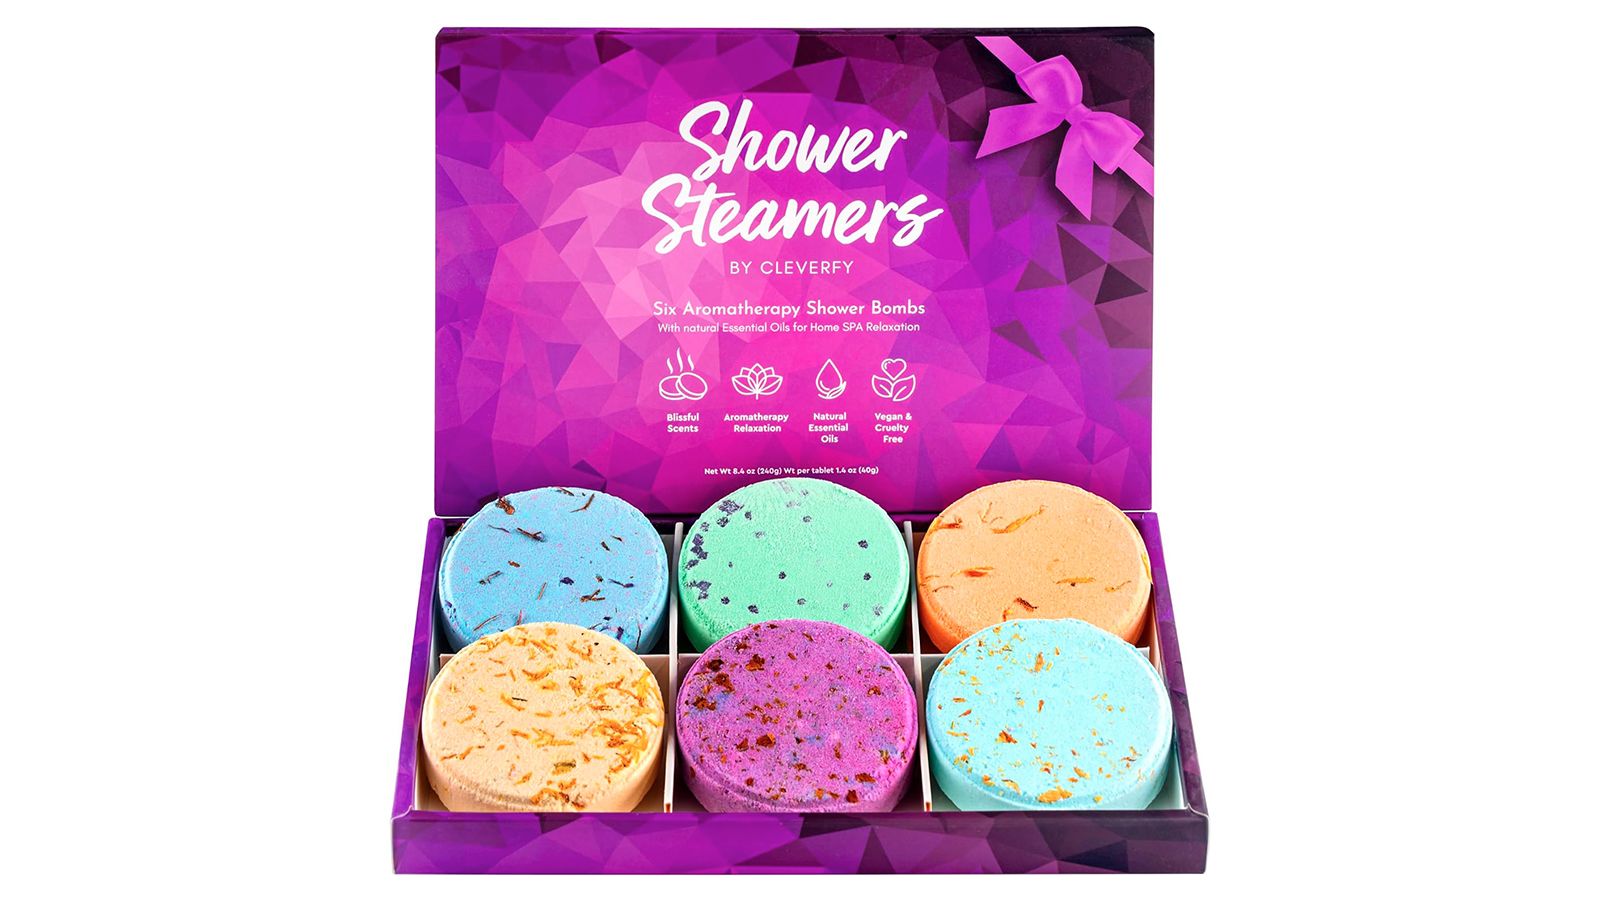 https://media.cnn.com/api/v1/images/stellar/prod/cleverfy-aromatherapy-shower-steamers-cnnu.jpg?c=original